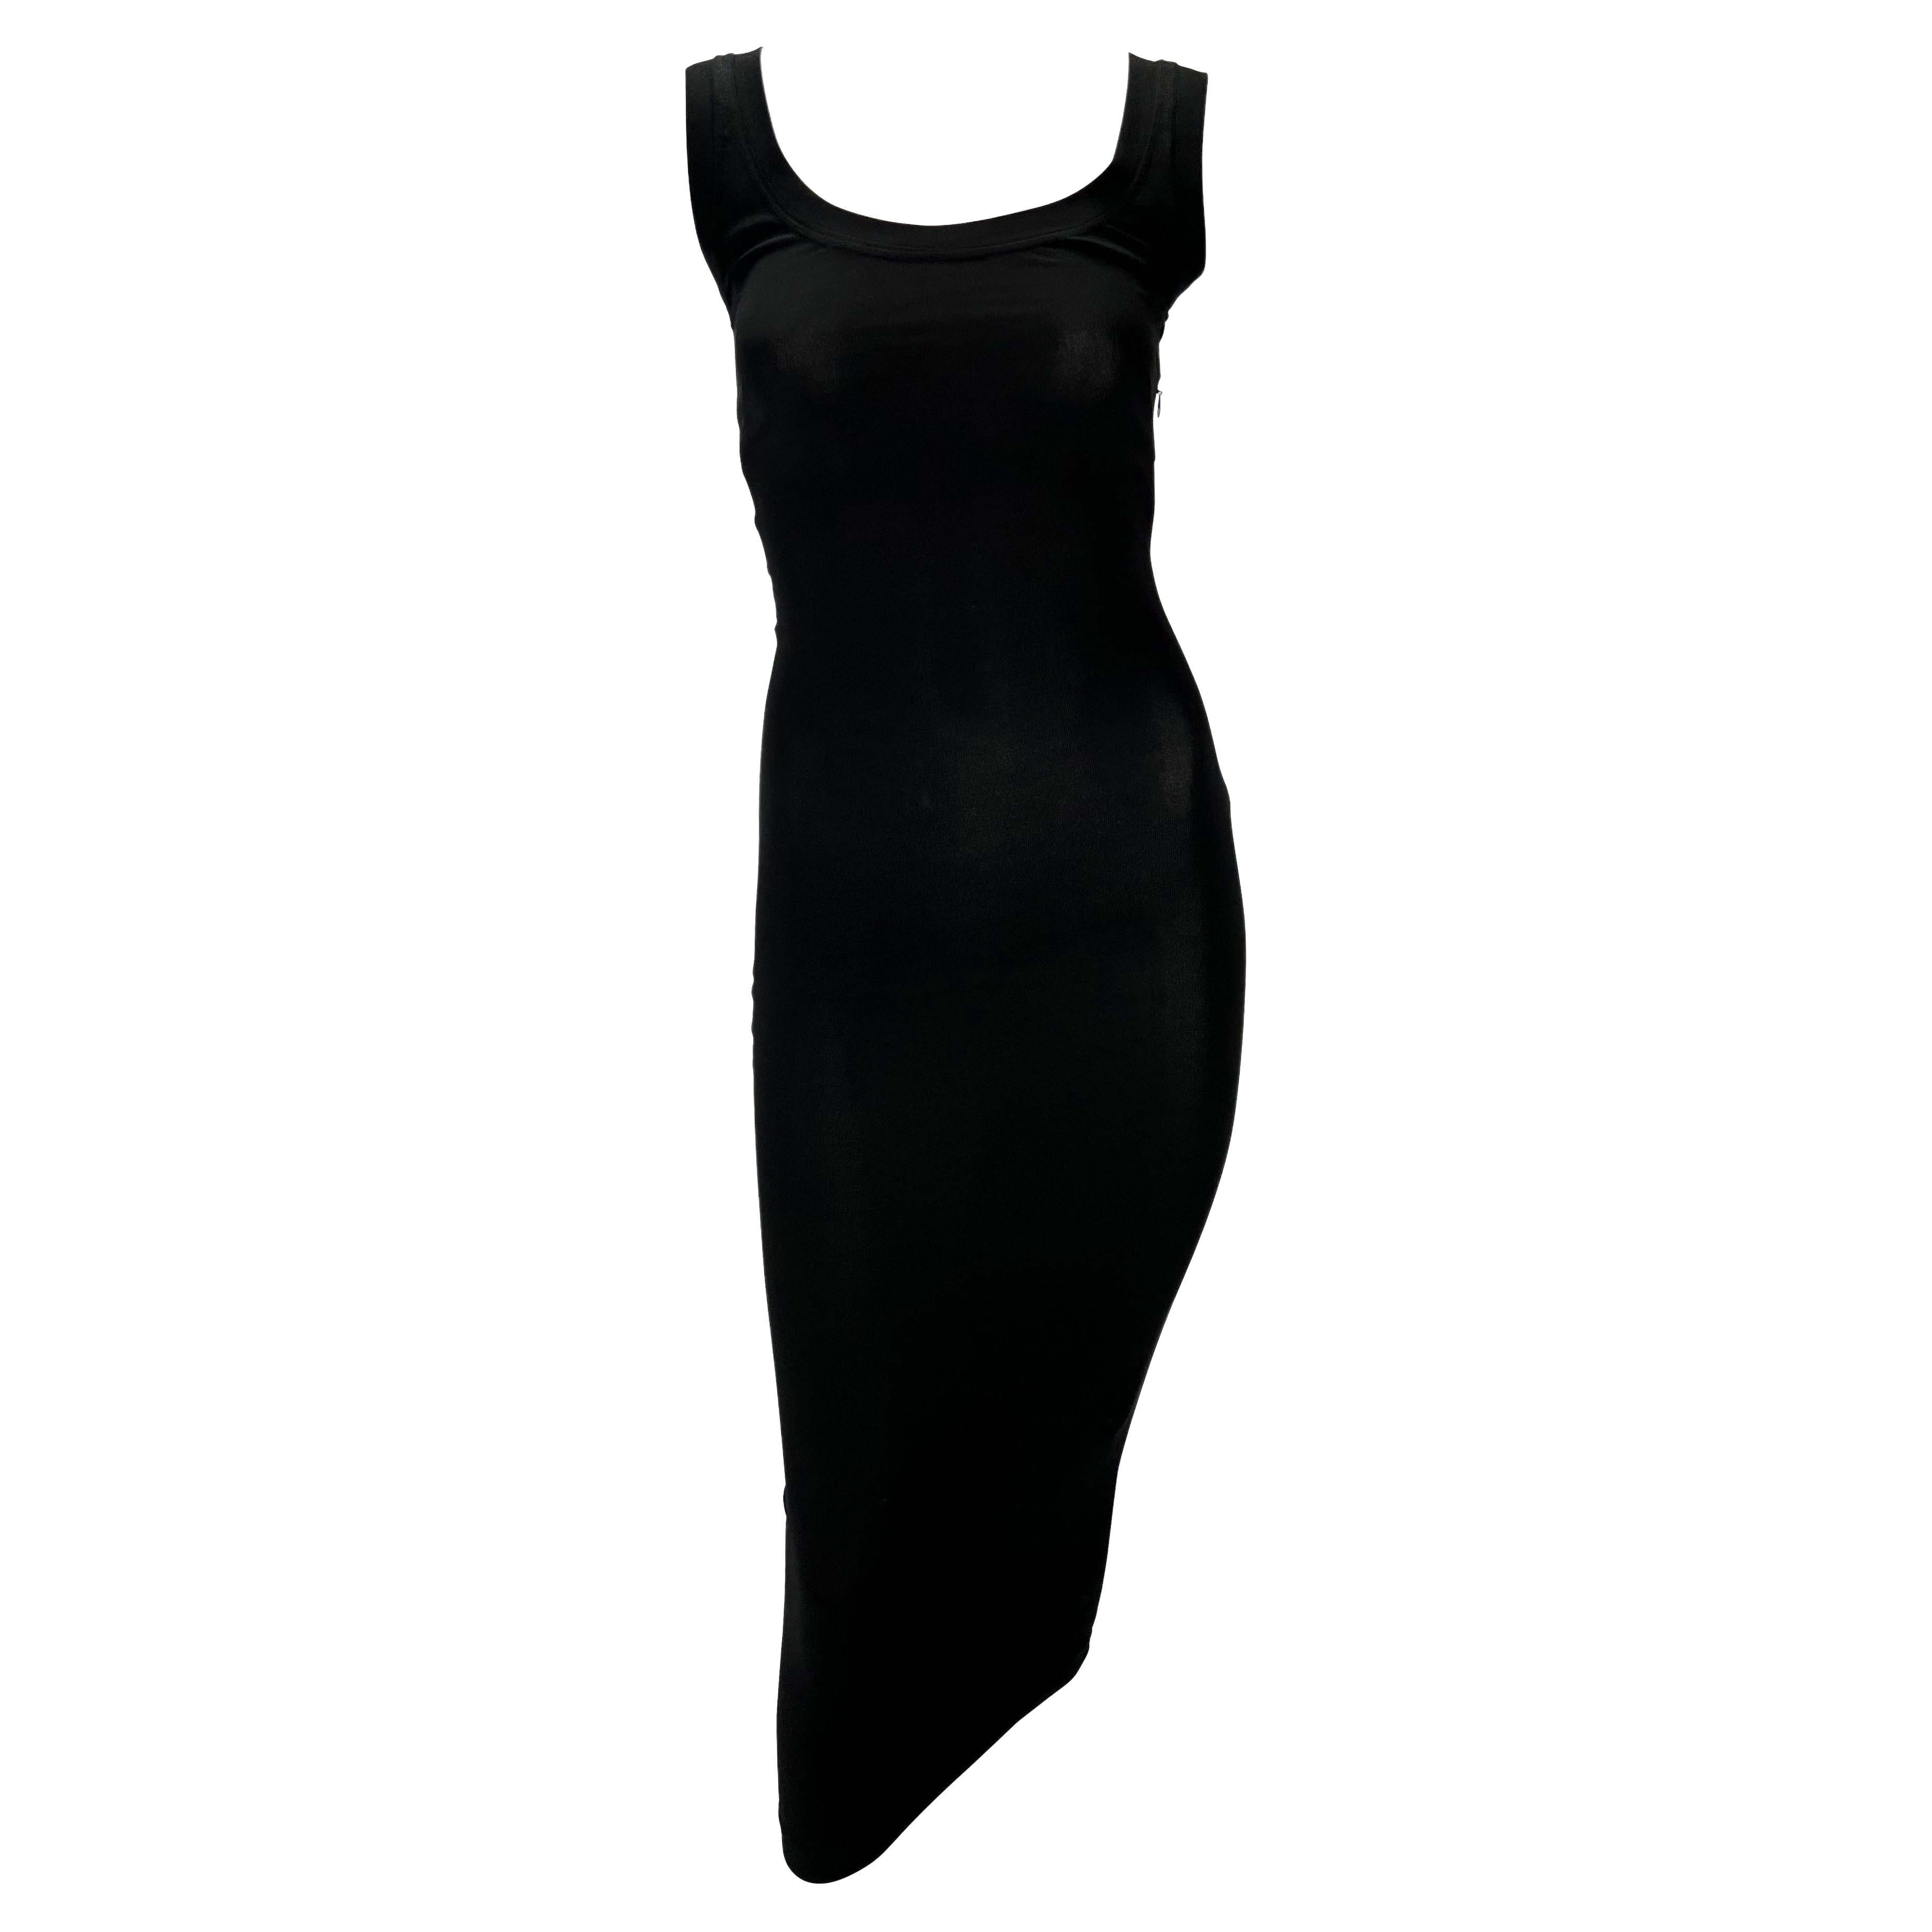 S/S 2003 Dolce & Gabbana 'Sex & Love' Stretch Black Tank Dress For Sale